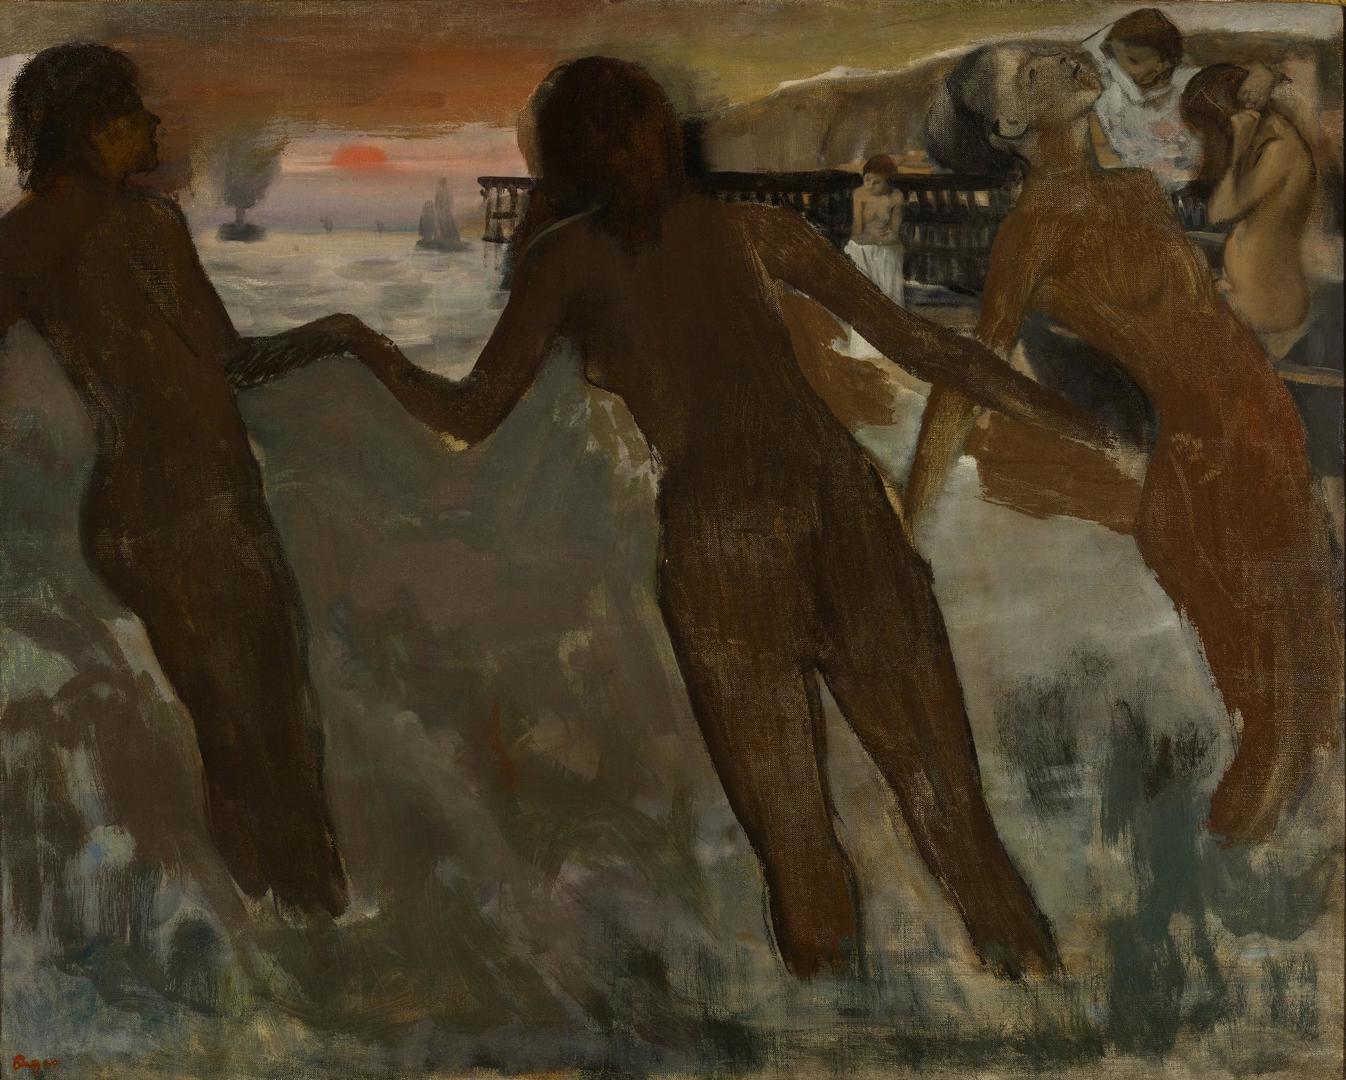 Peasant Girls bathing in the Sea at Dusk by Hilaire-Germain-Edgar Degas